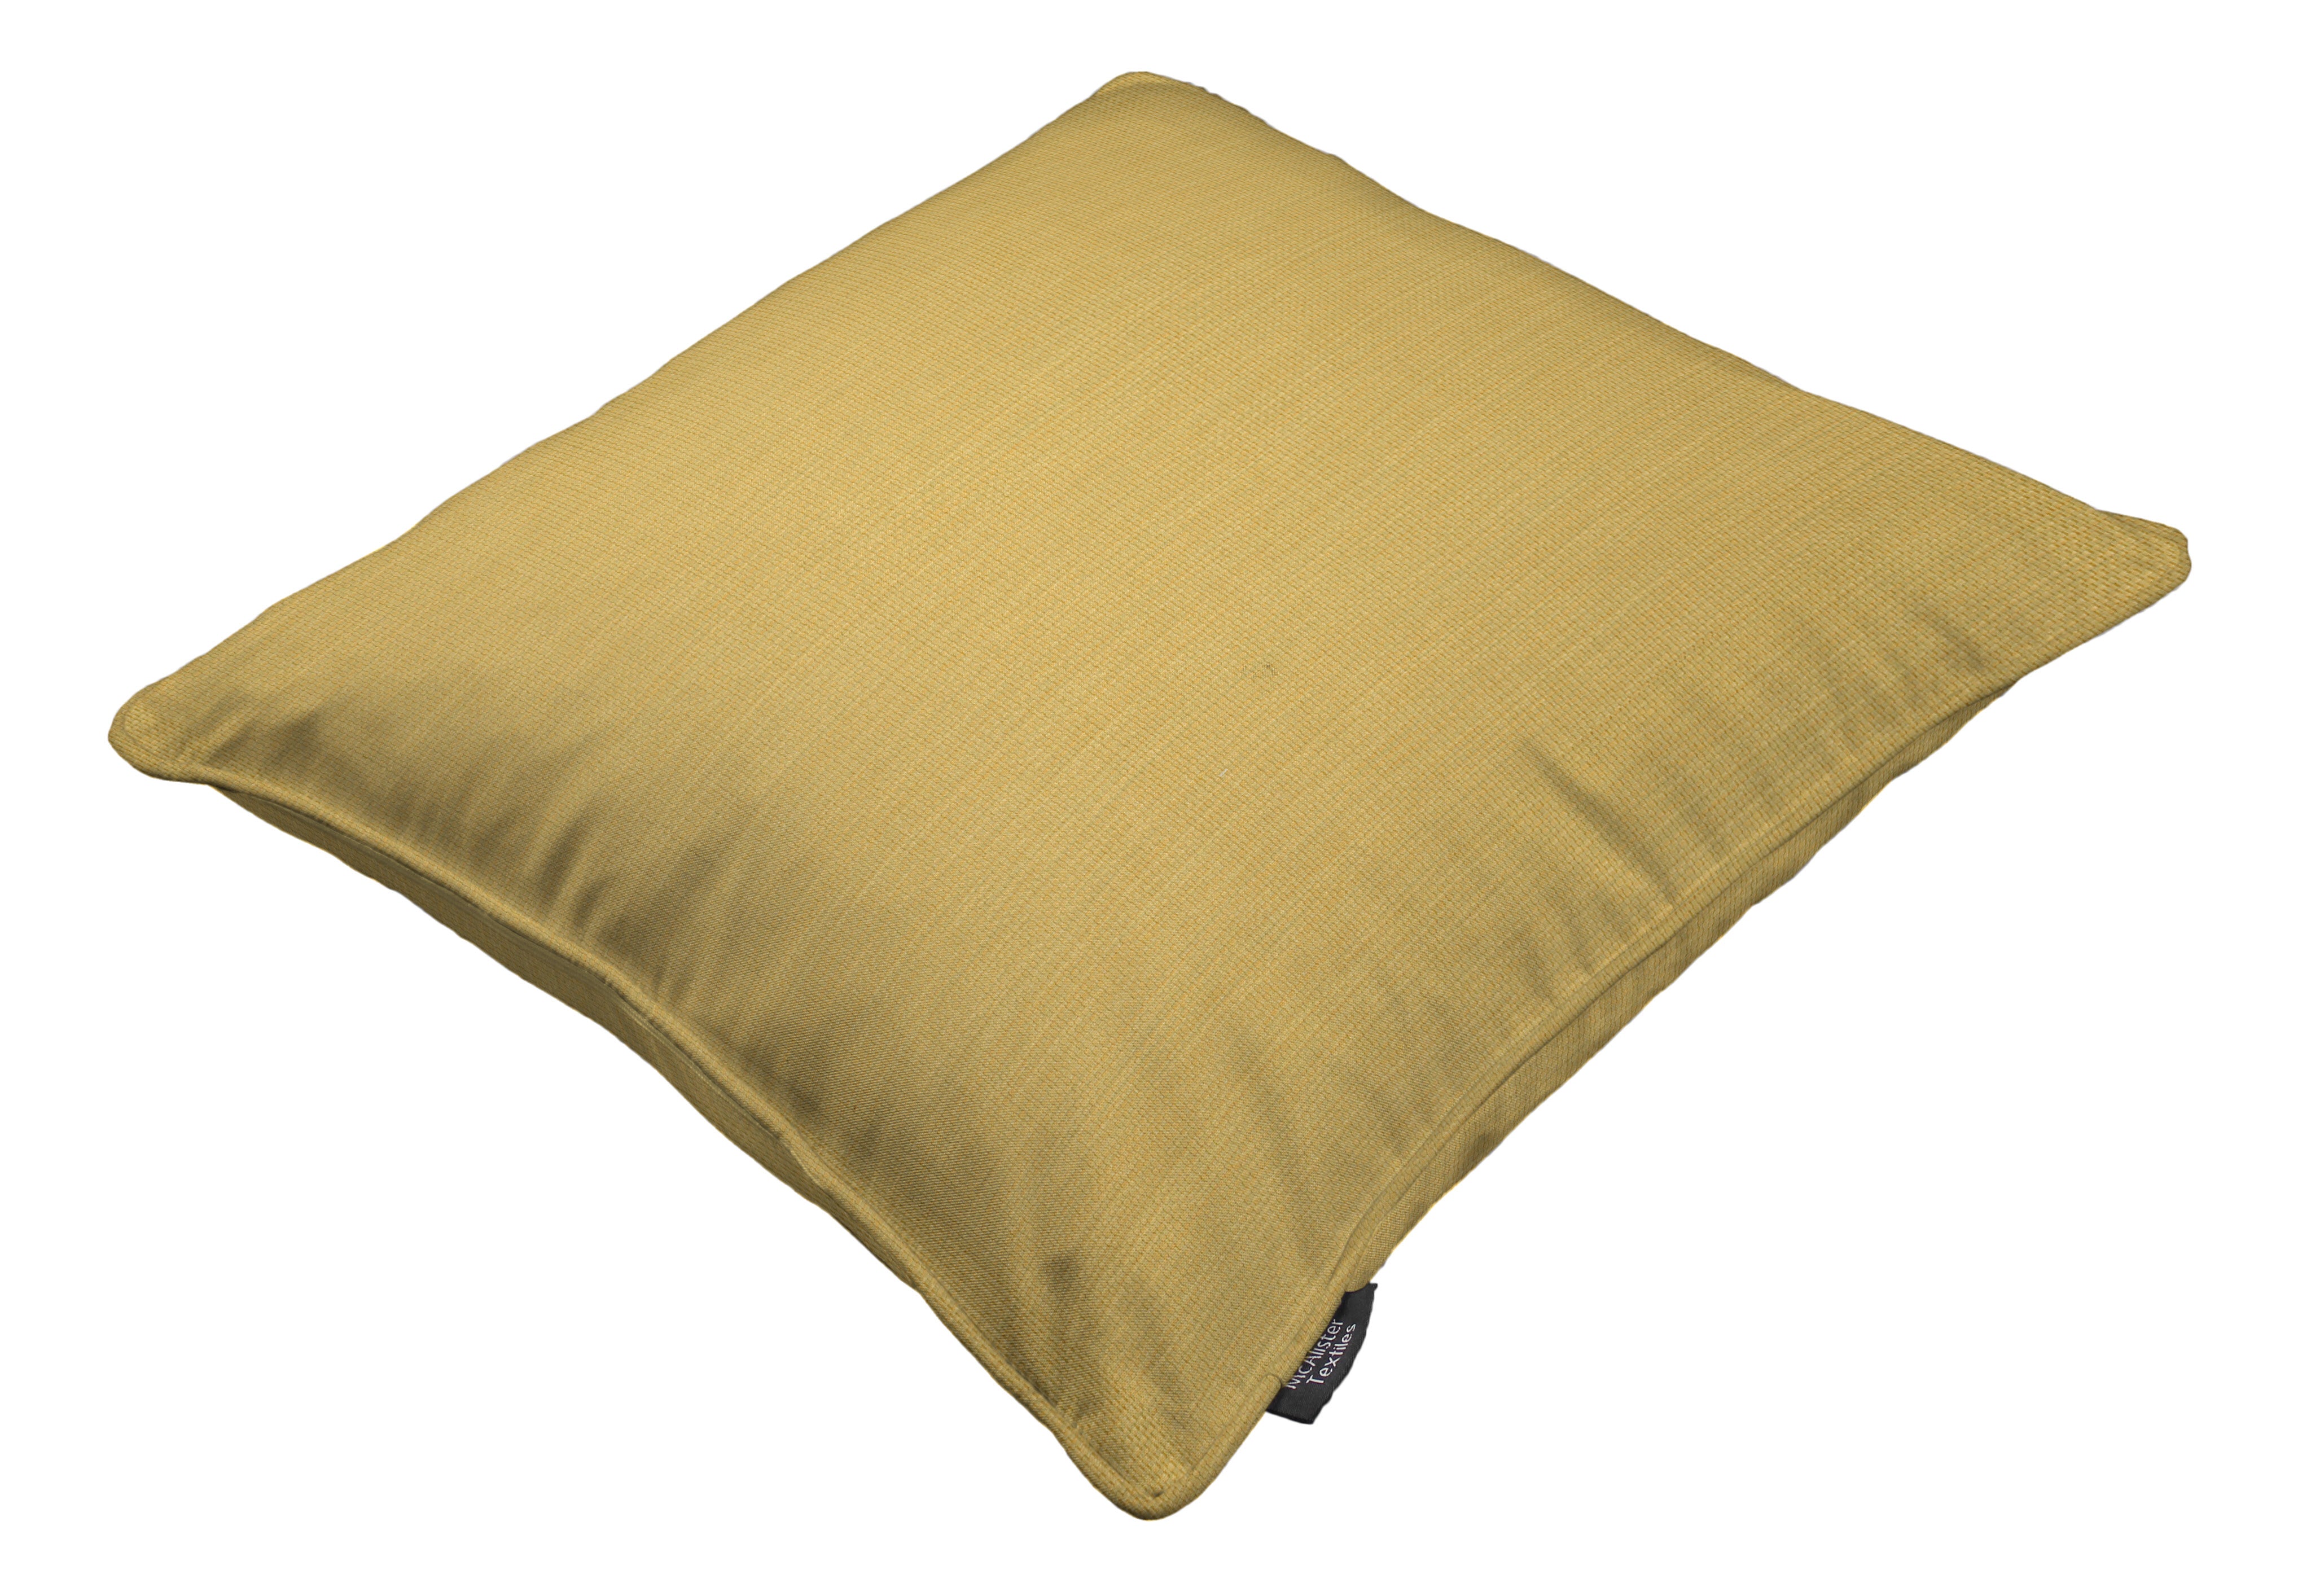 Capri Ochre Yellow Piped Cushion